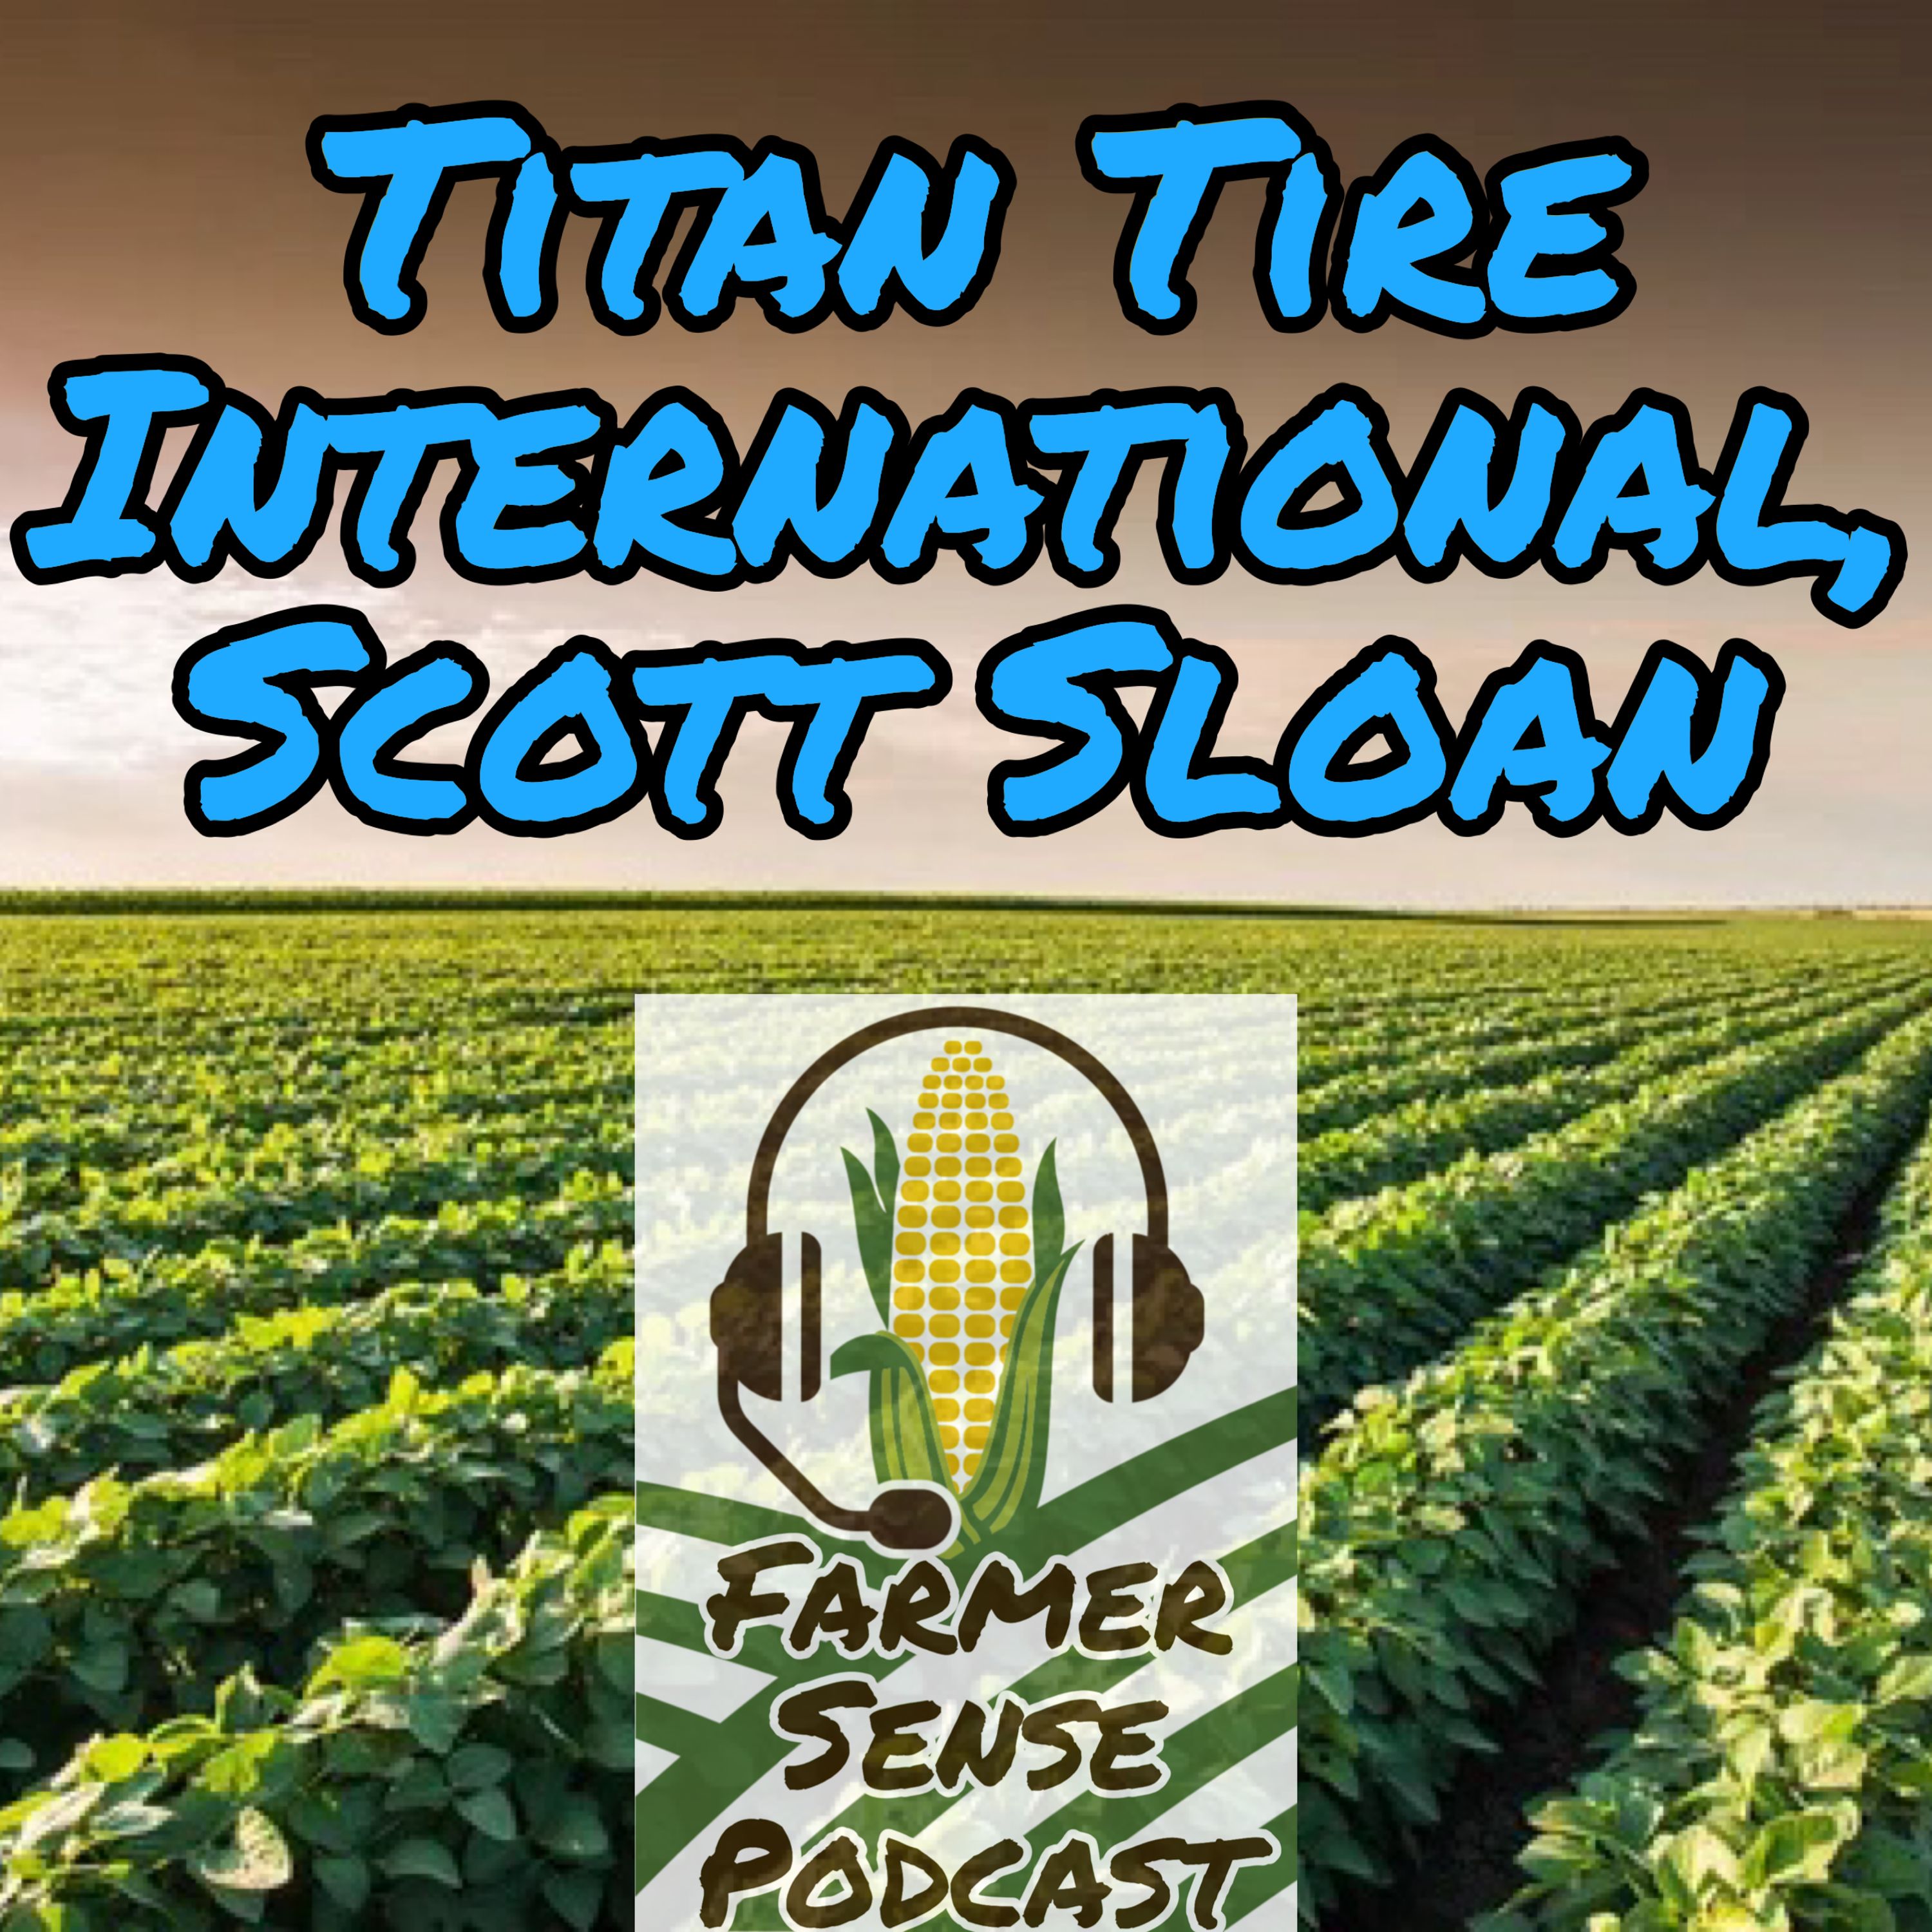 Scott Sloan with Titan Tire International